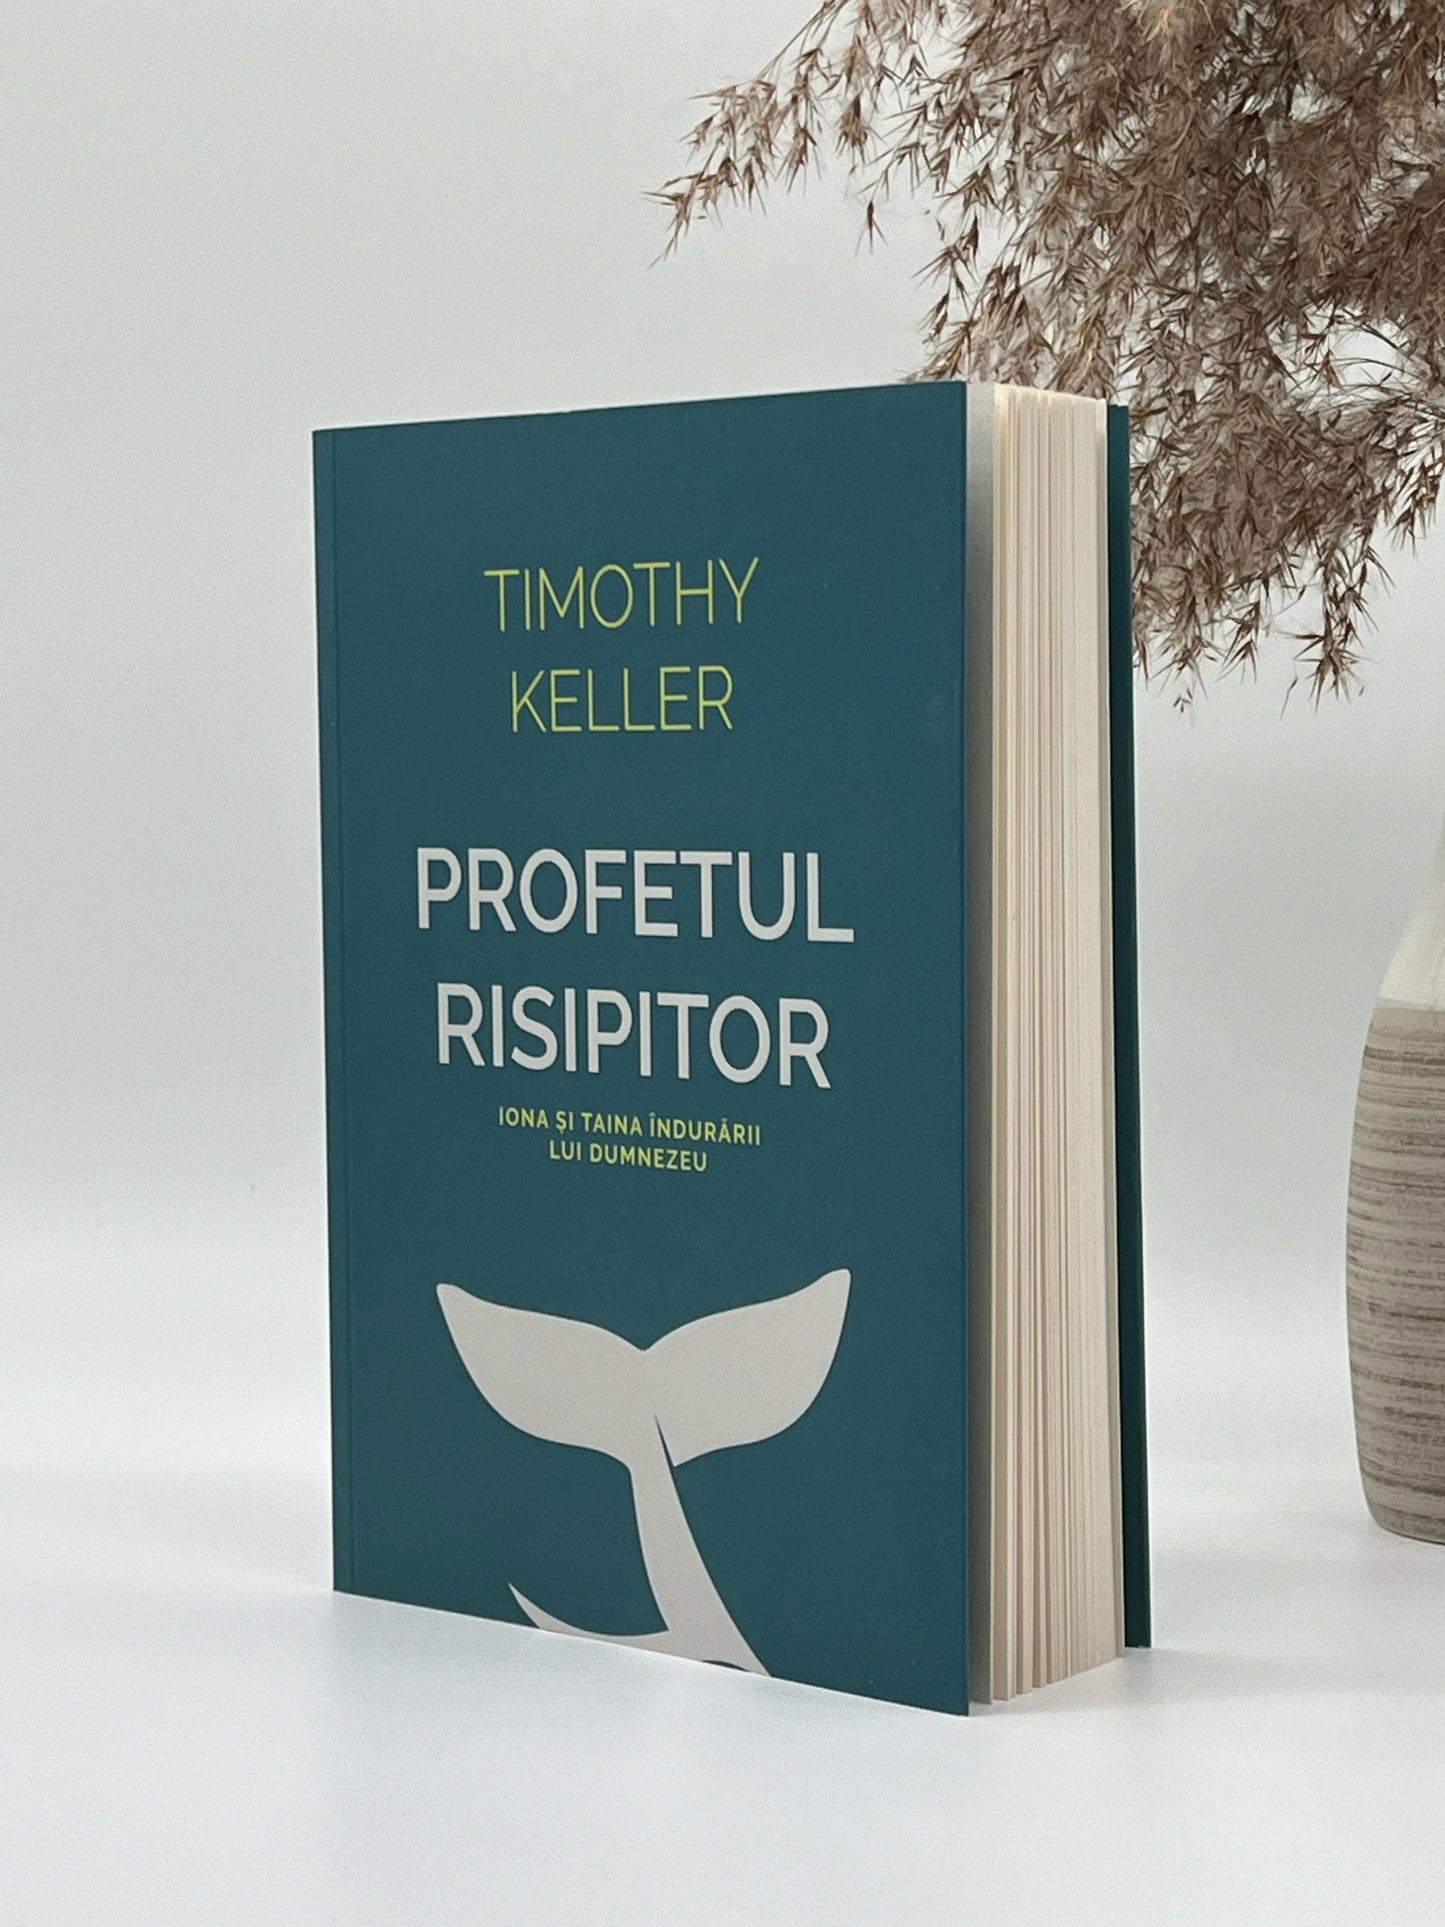 Profetul risipitor - 
Timothy Keller